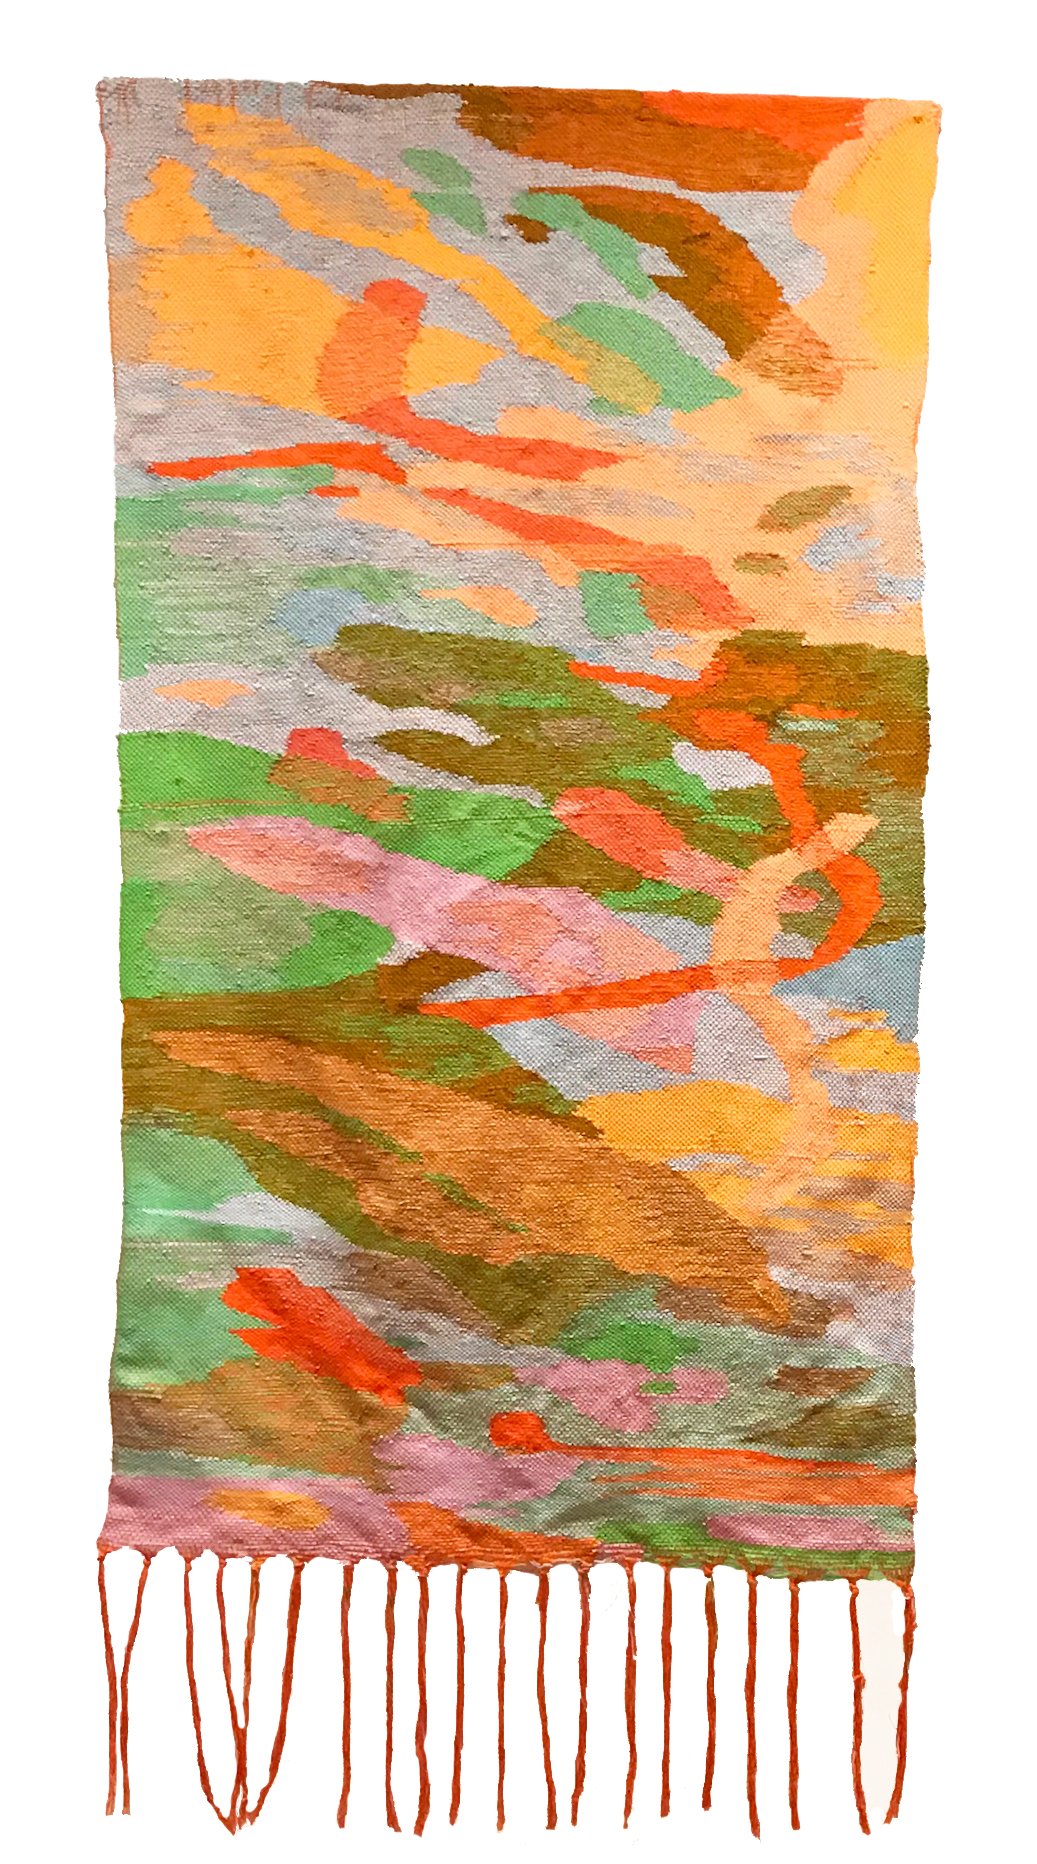 Clare Dudeney - Vagabond, woven cotton, 130 x 68 cm, 2019JPG.JPG